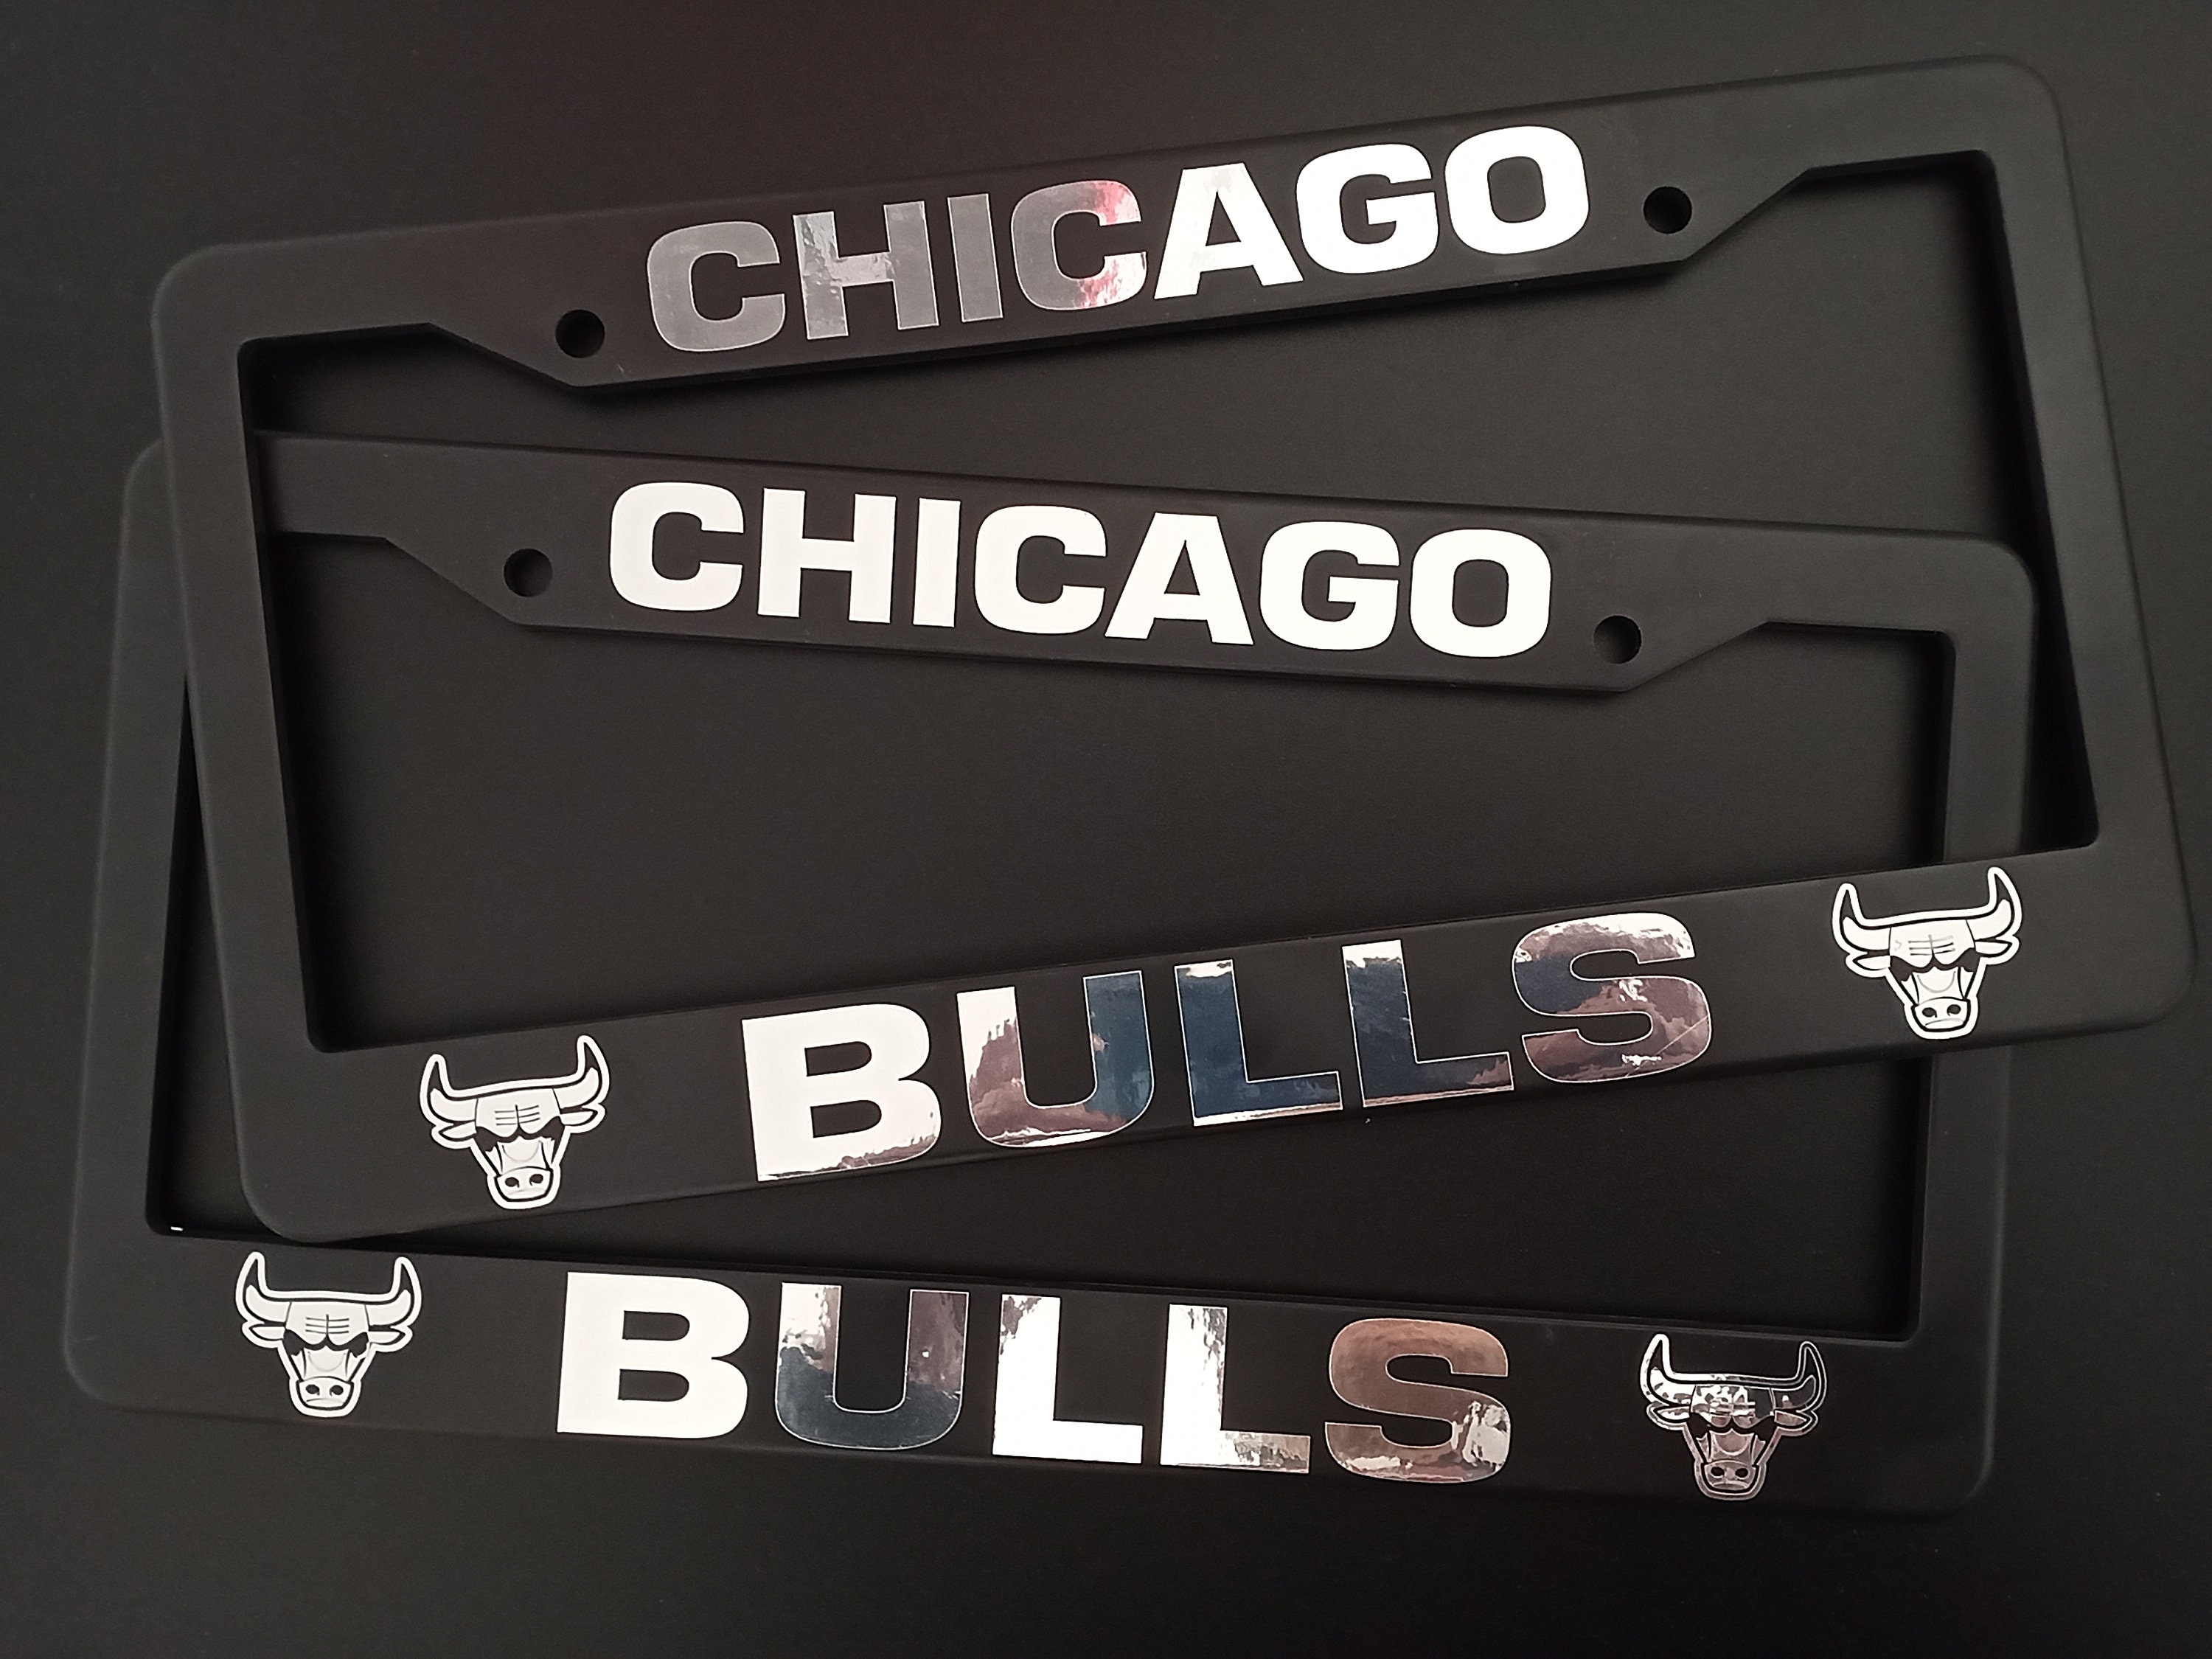 FANMATS Chicago Bulls License Plate Frame